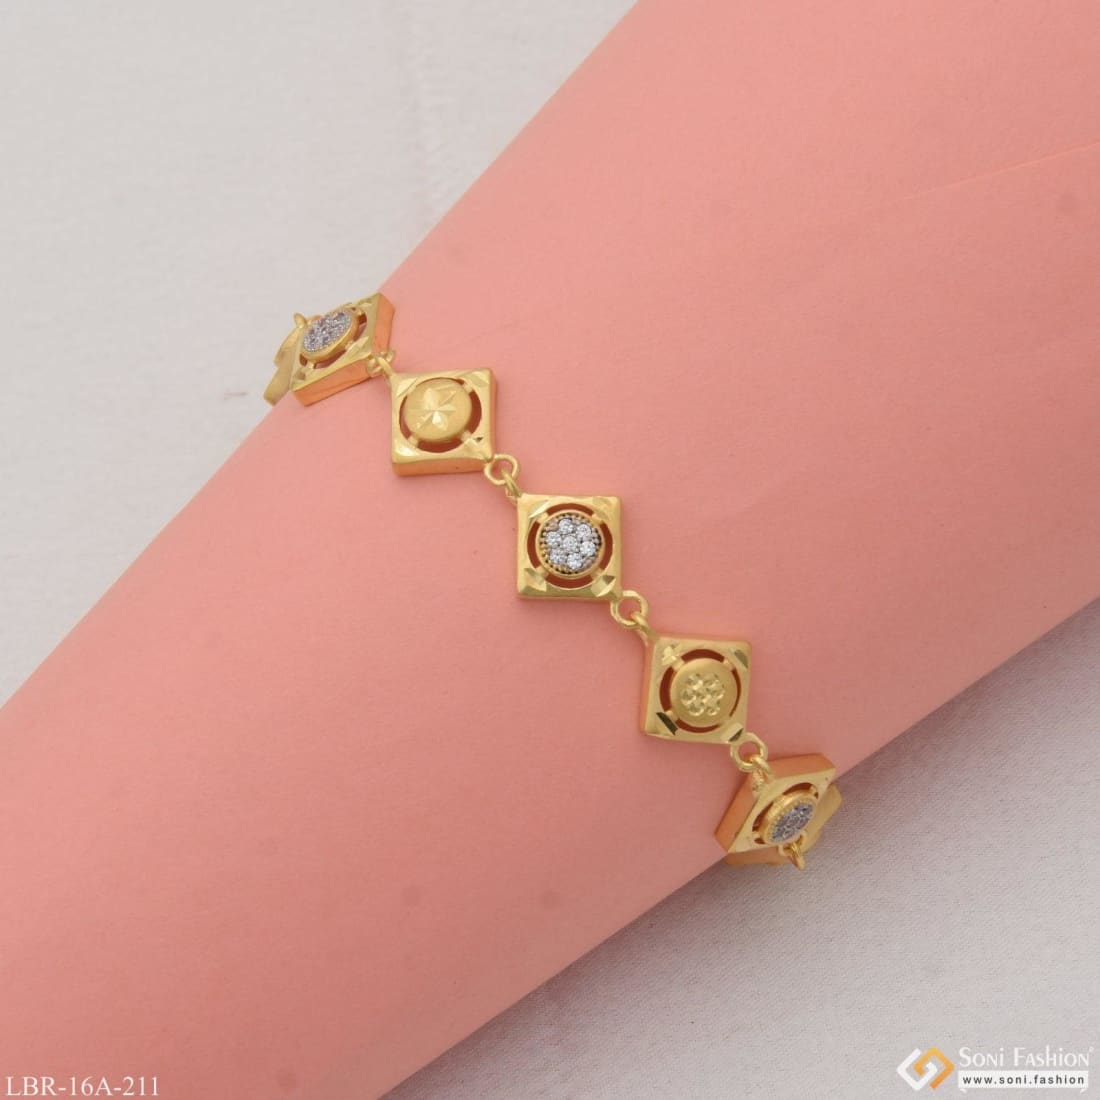 Trends Of Fashion Bracelets In 2020 | Gold bracelet for girl, Gold bracelet,  Gold bracelet for women